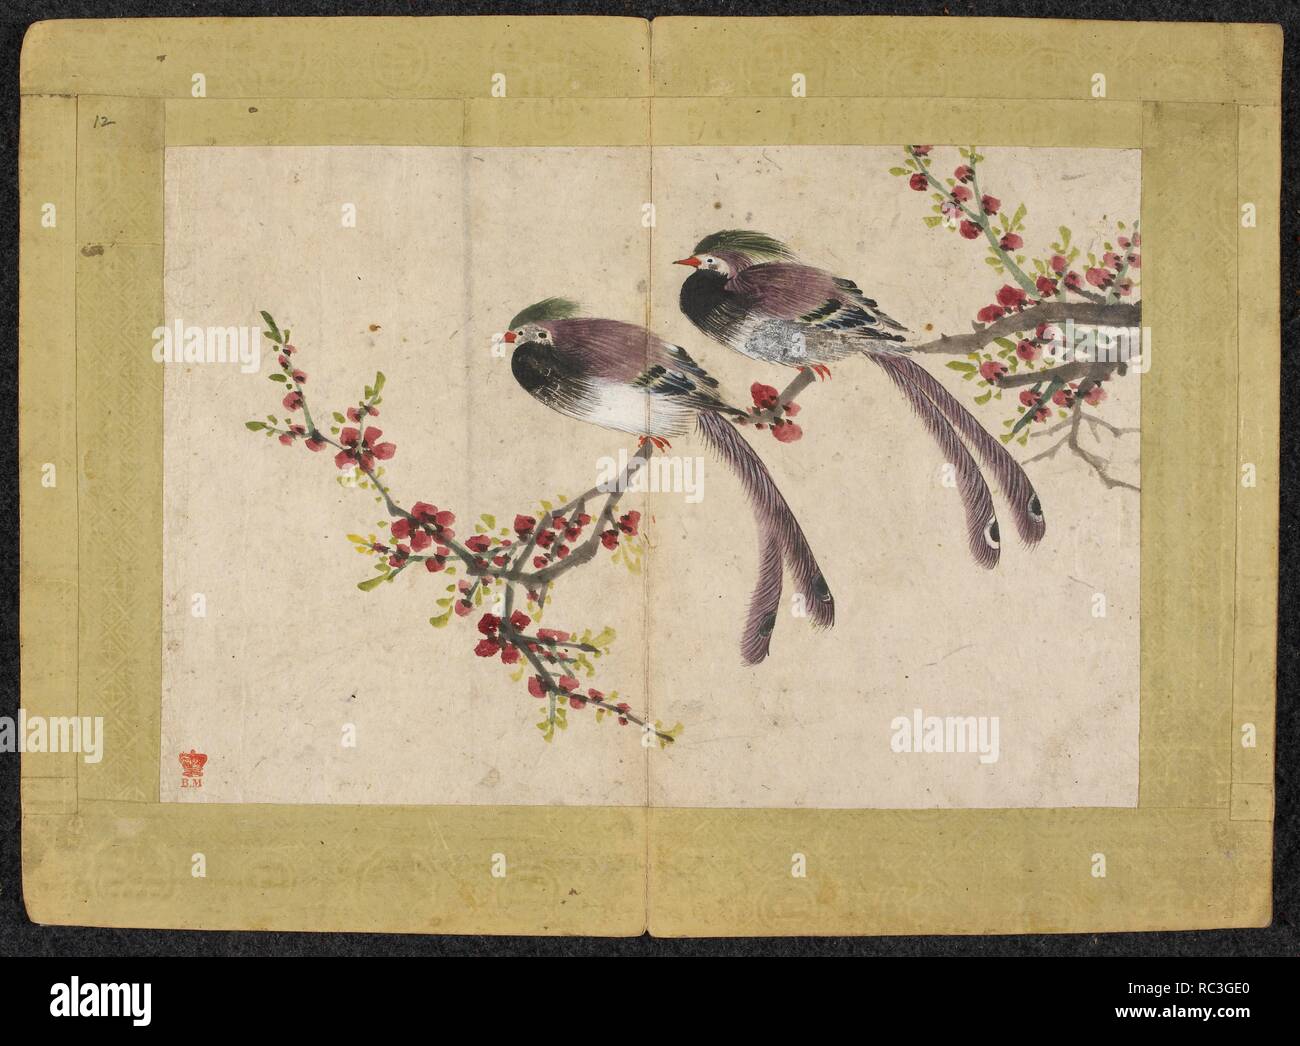 Long-tailed birds on plum tree branch. Kyomjae hwachop [Album of paintings by Kyomjae]. Korea, mid-18th century. Source: Or. 5713, ff.11v-12. Language: Korean. Stock Photo